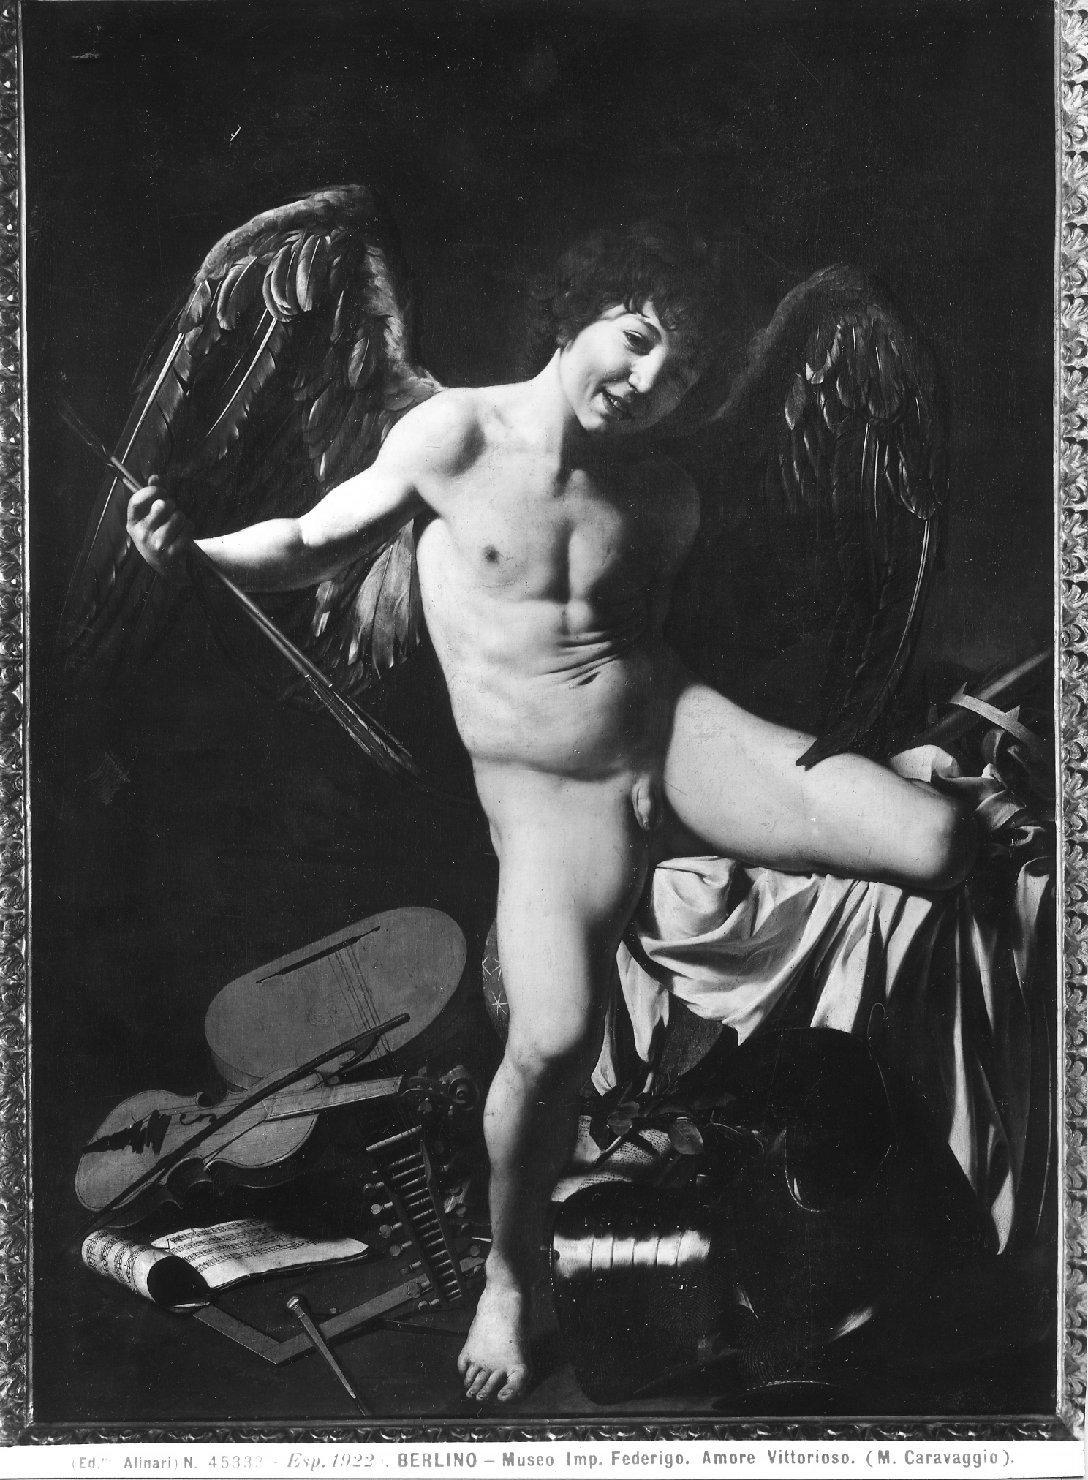 Fotografo non identificato, Berlino - Museo Imp. Federigo. Amore Vittorioso. (M. Caravaggio), gelatina bromuro d'argento/ carta, 0800458943